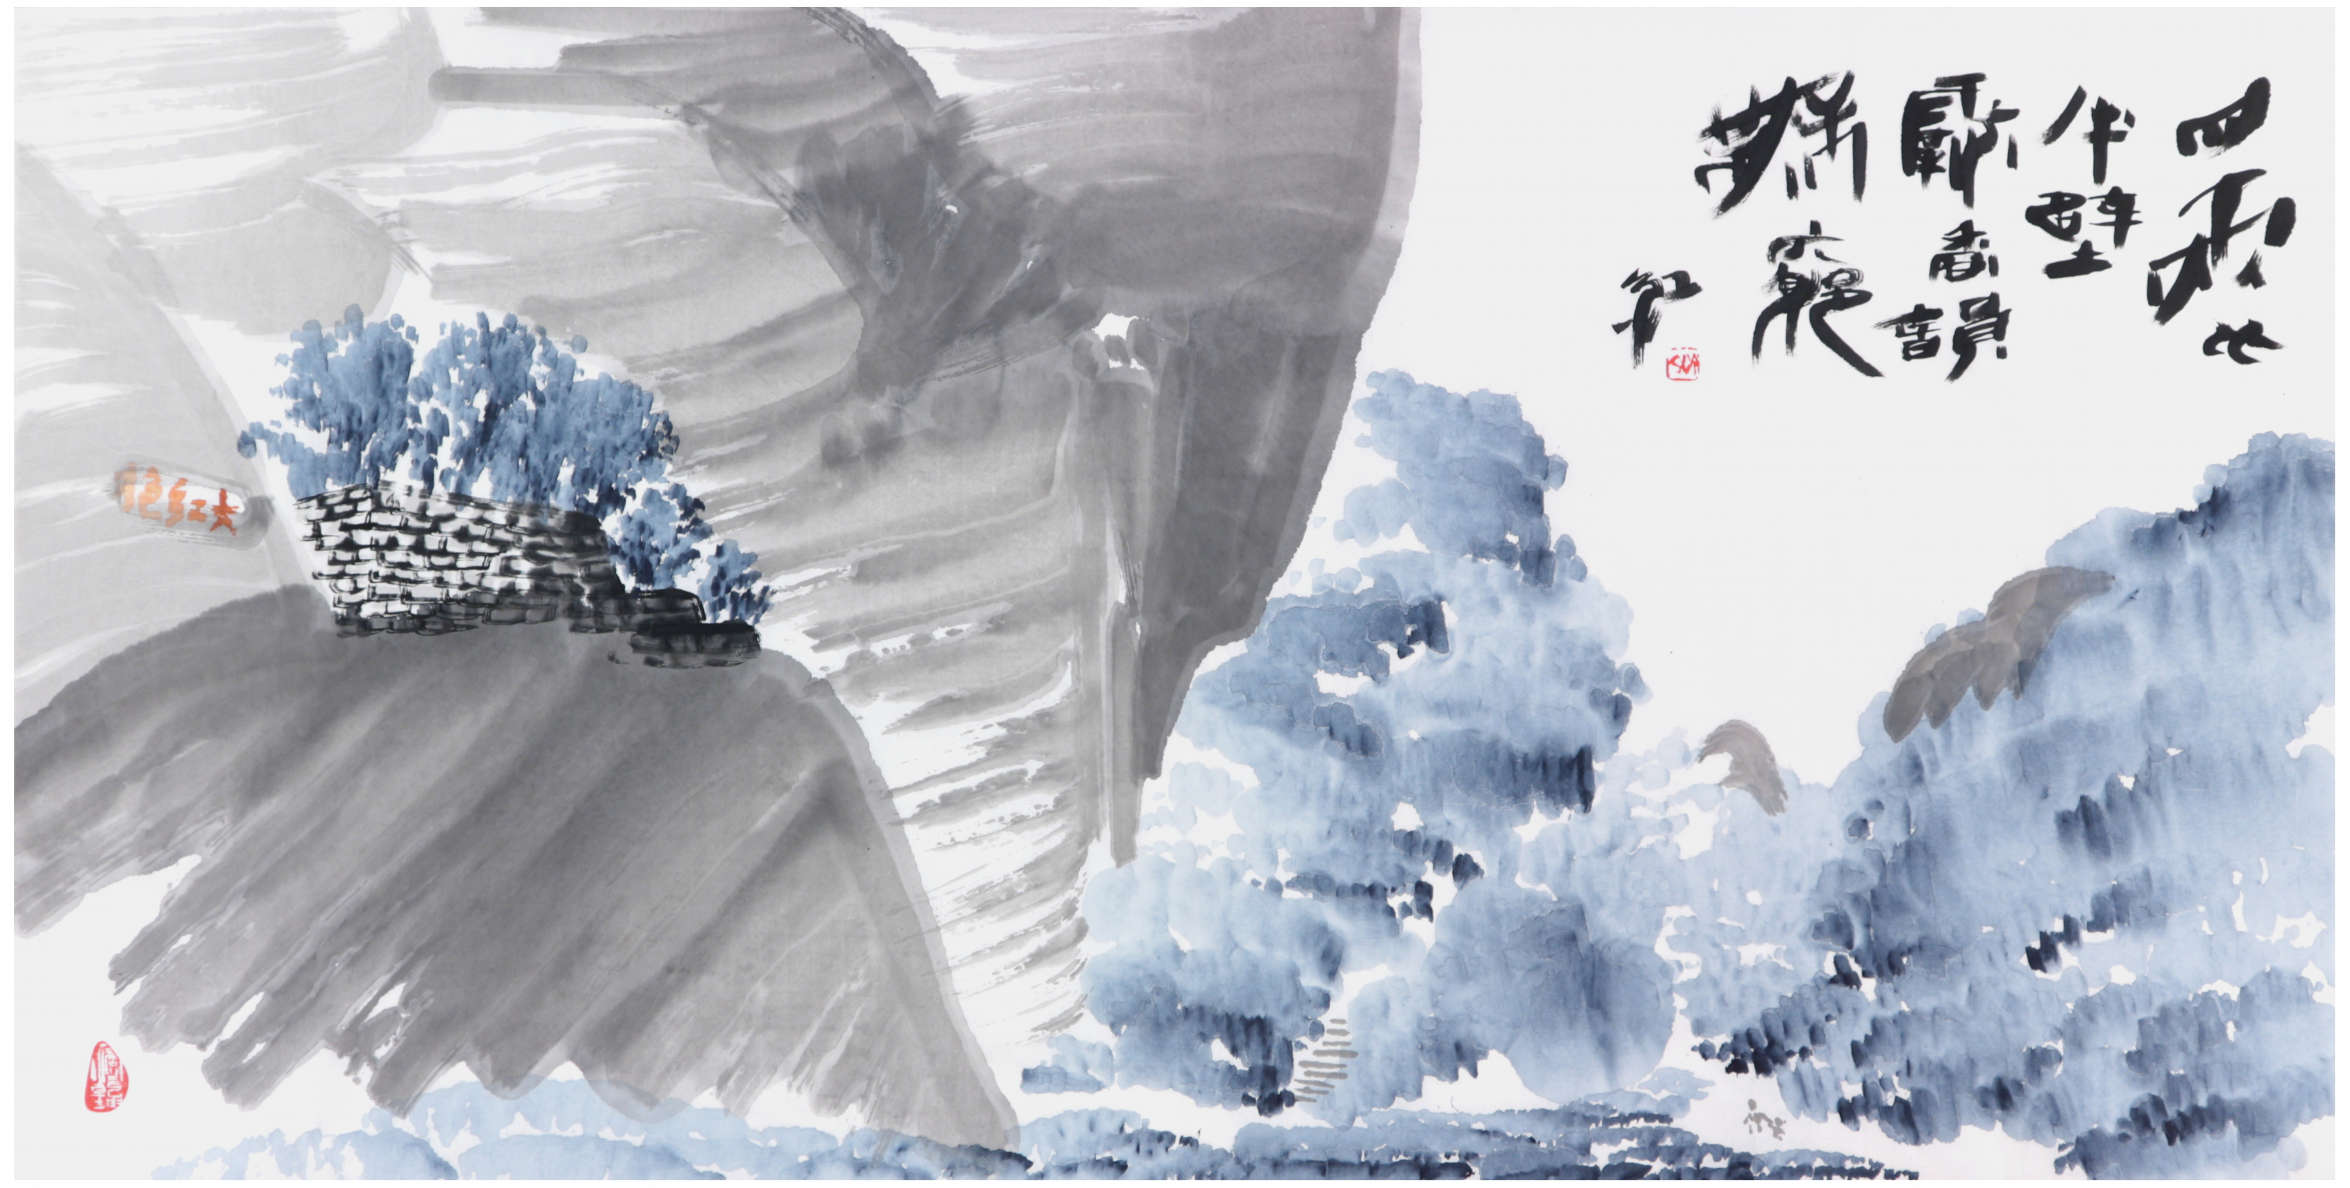 Qi Hong (Sai Koh) 's freehand brushwork style ink wash painting (aka Chinese painting, literati painting, ink painting, ink brush painting): Six of Da Hong Pao Original Bushes, 138×69cm, ink & color